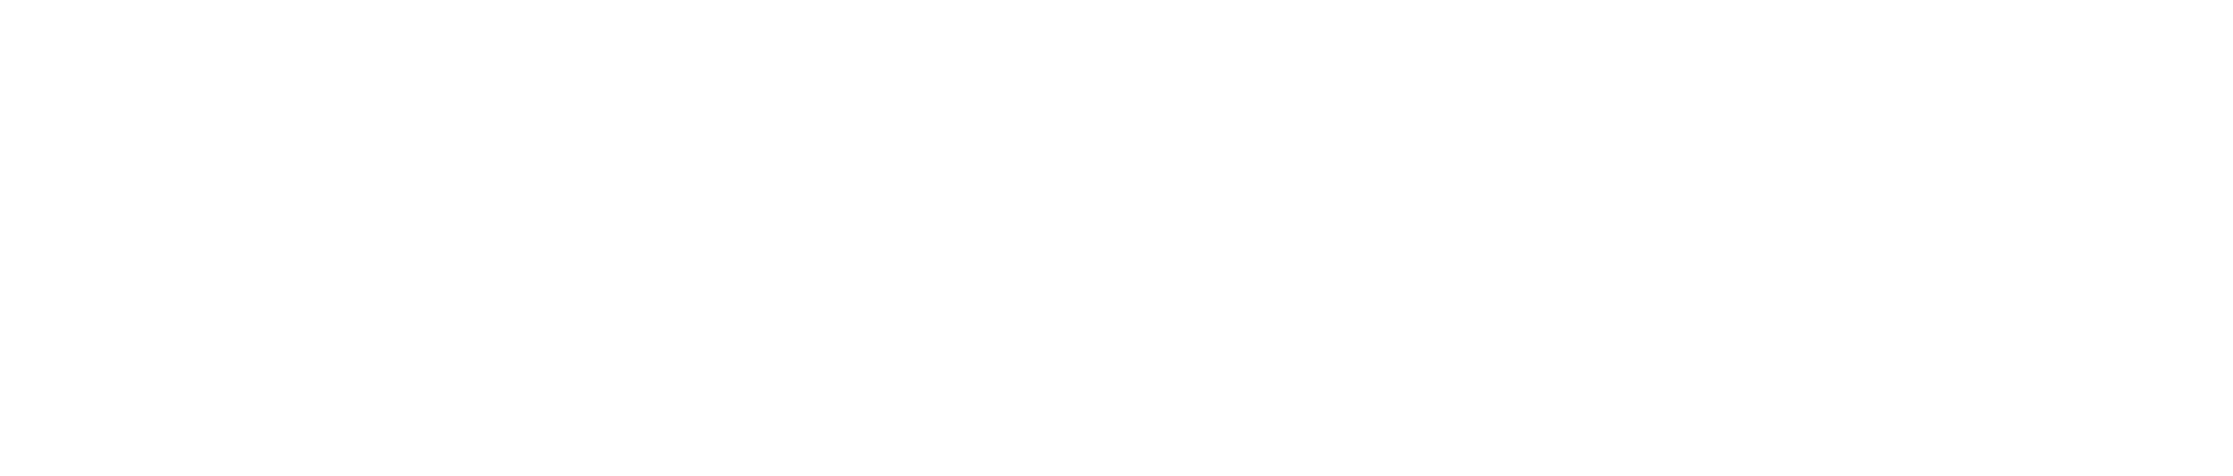 Assembly Winter 2023 Tournaments - Tournaments - Esportal x ENCE 1v1 RAW AIM SERIES